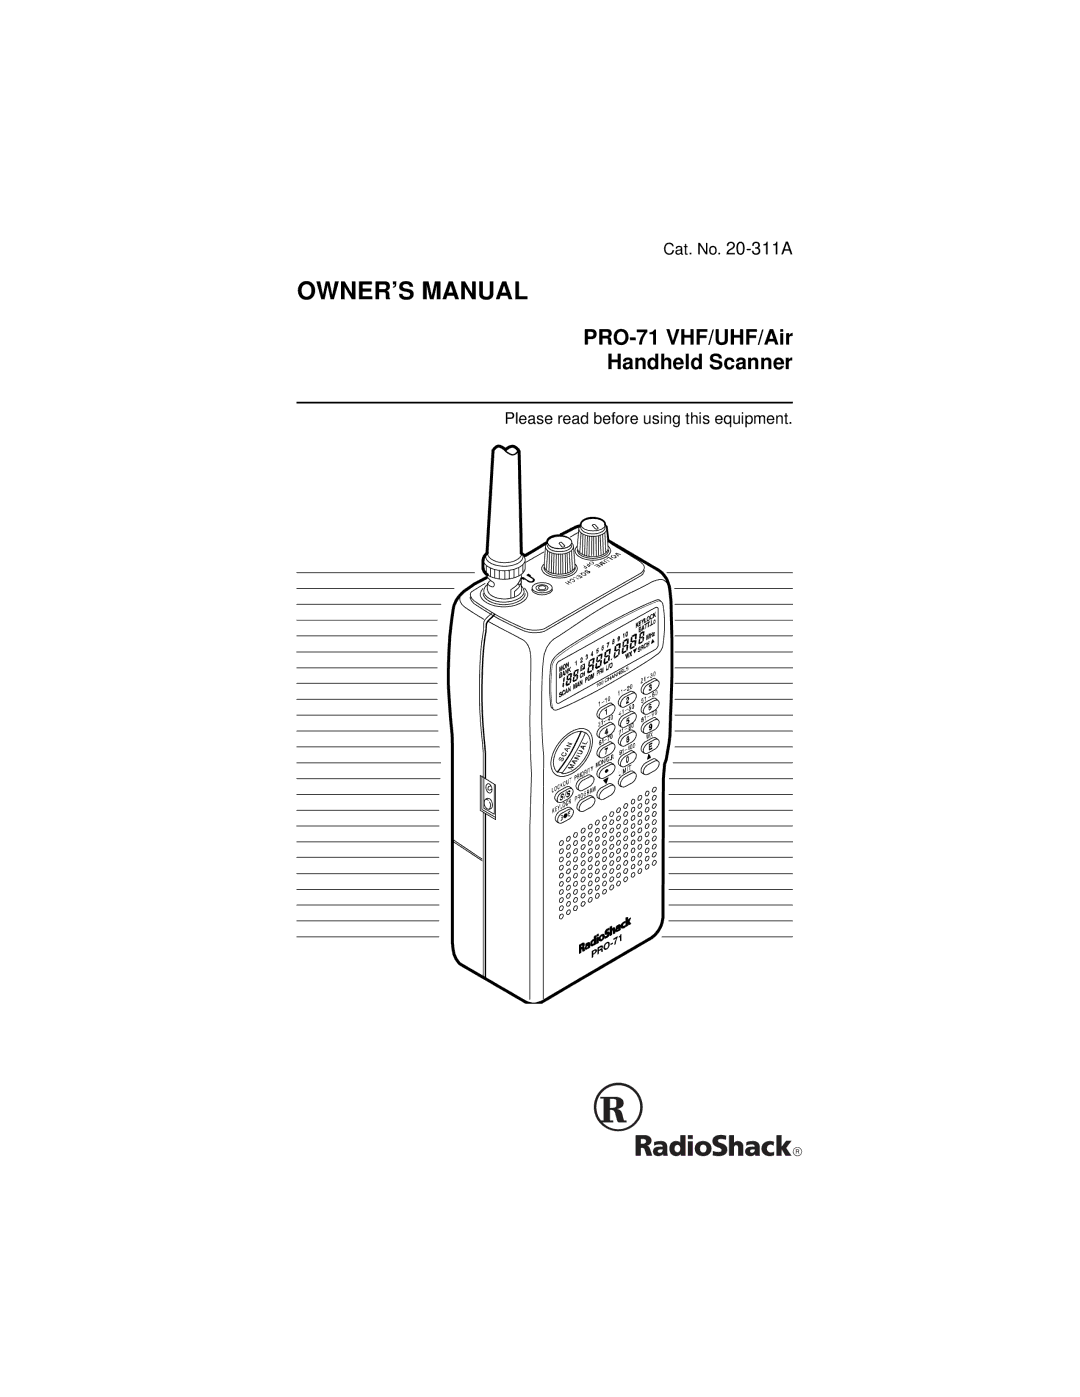 Radio Shack Pro-71 owner manual PRO-71 VHF/UHF/Air Handheld Scanner 